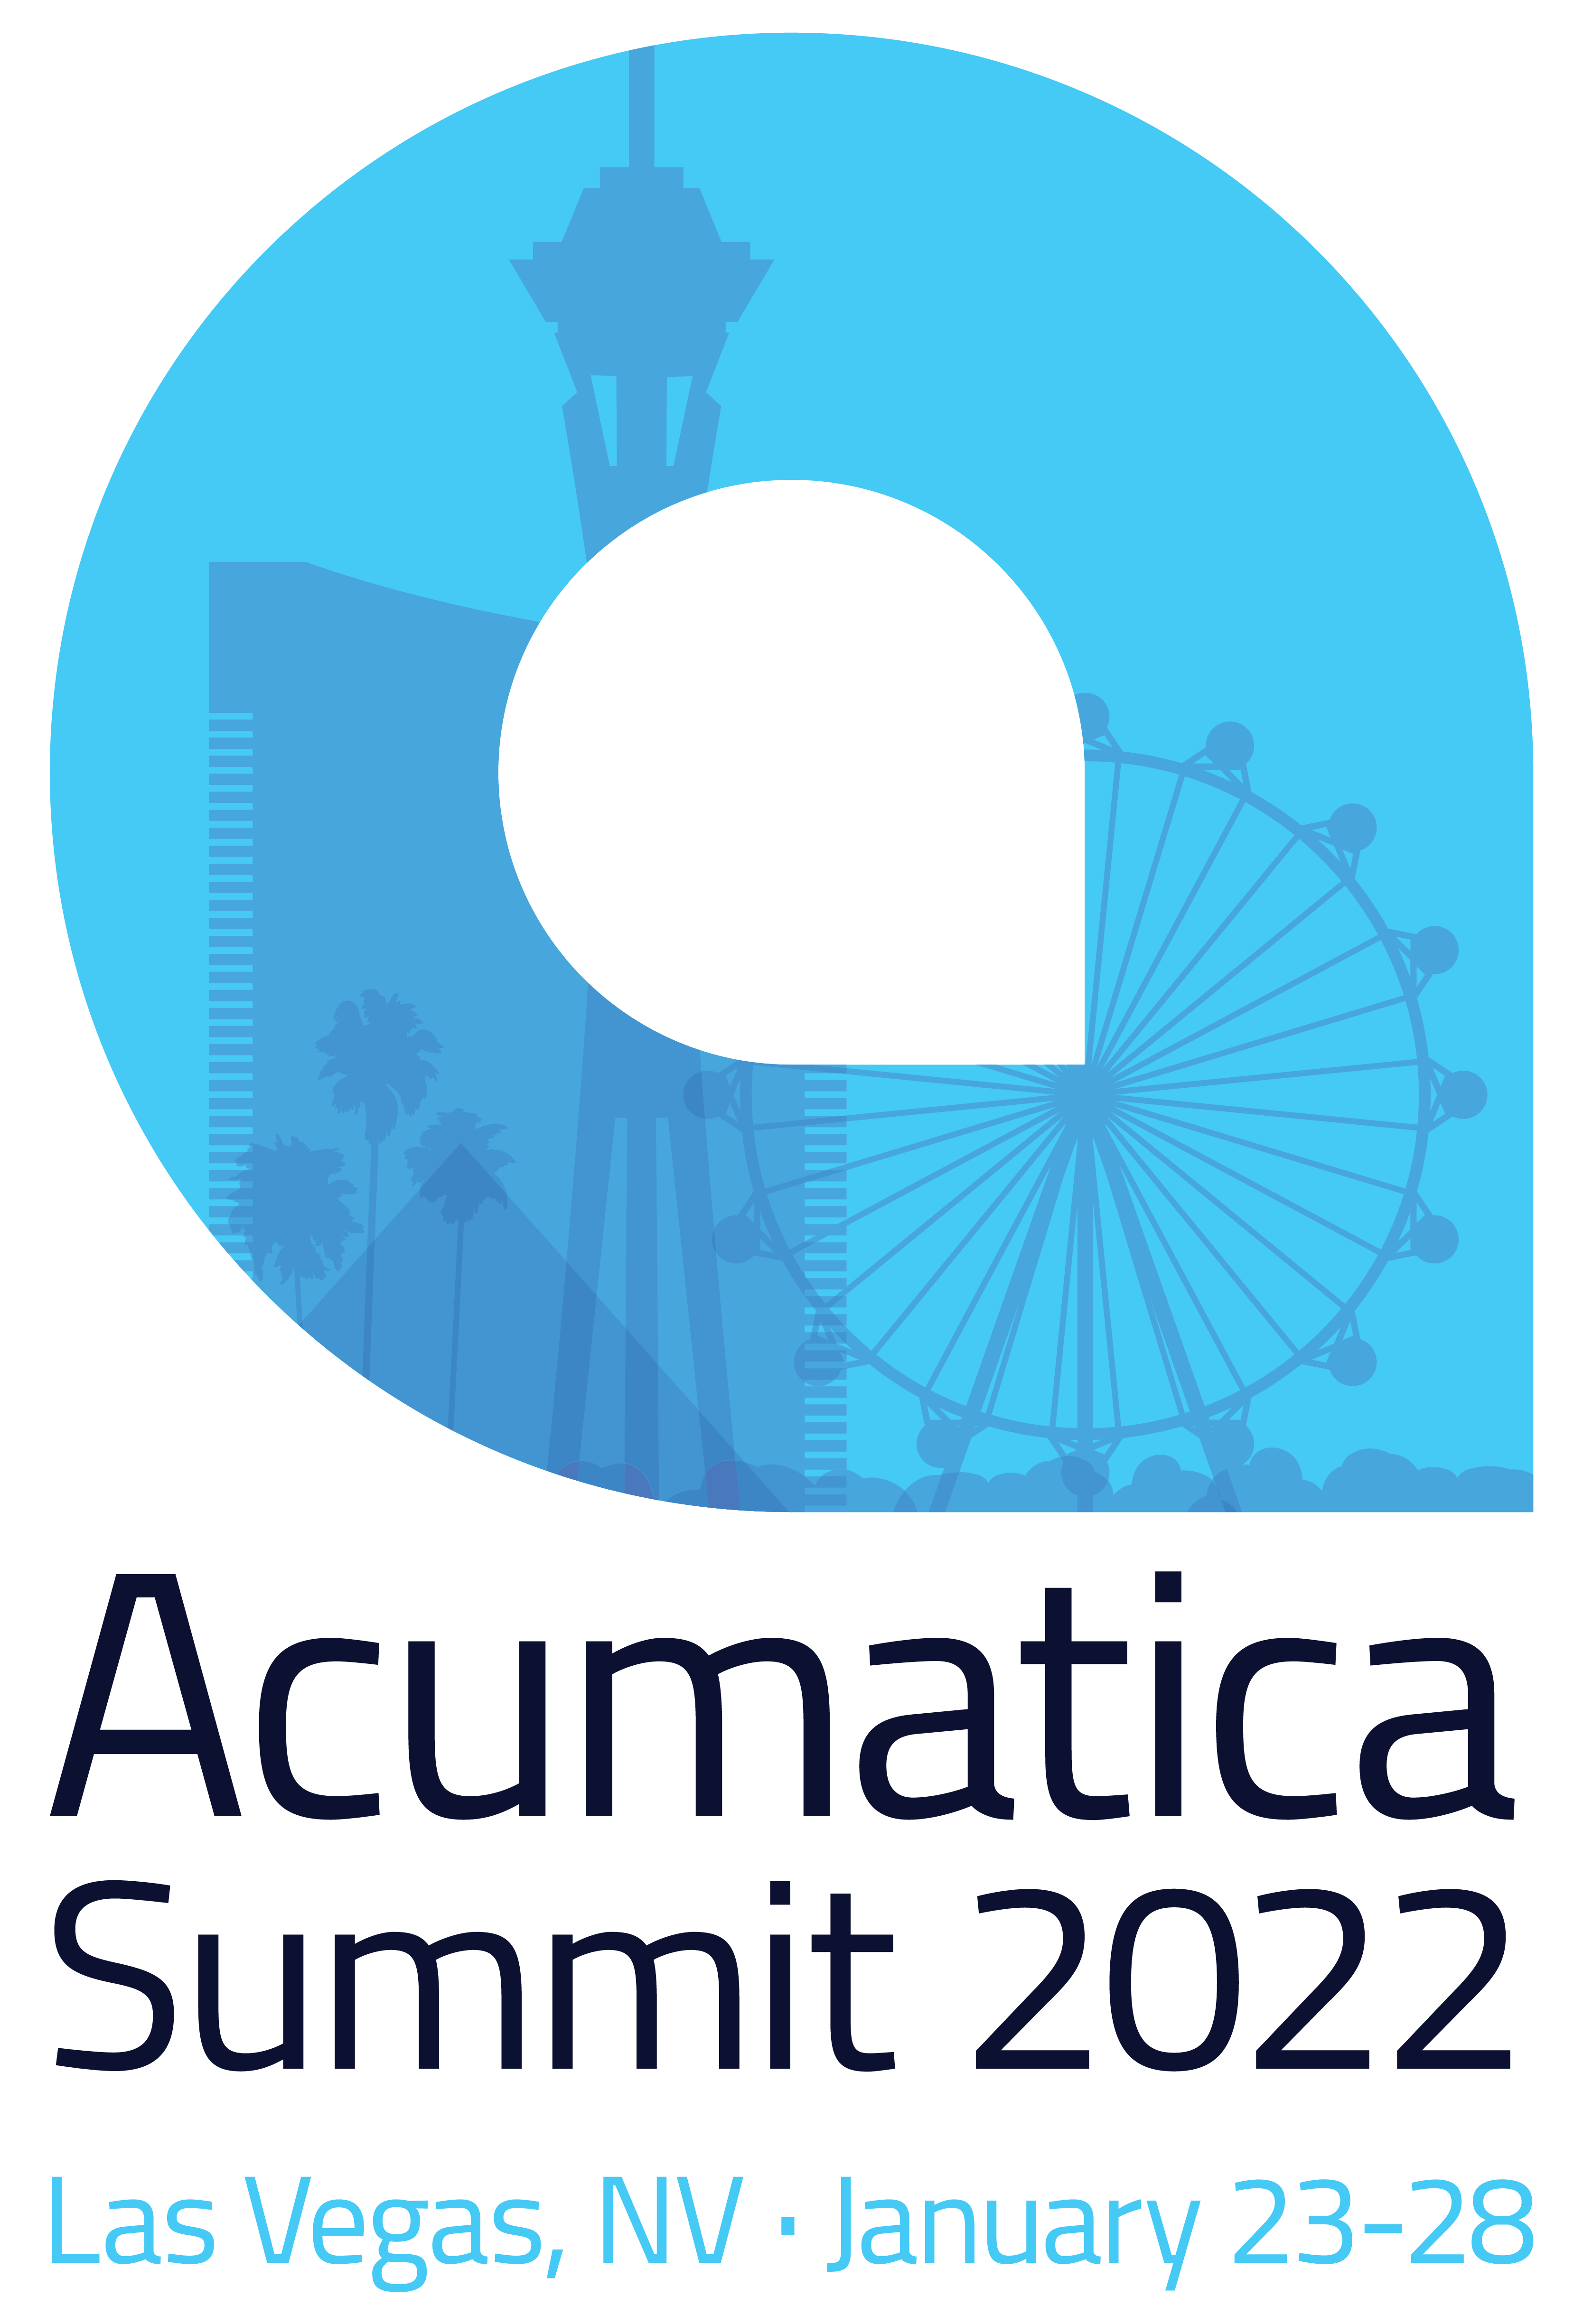 Acumatica Summit 2022 Starts This Week